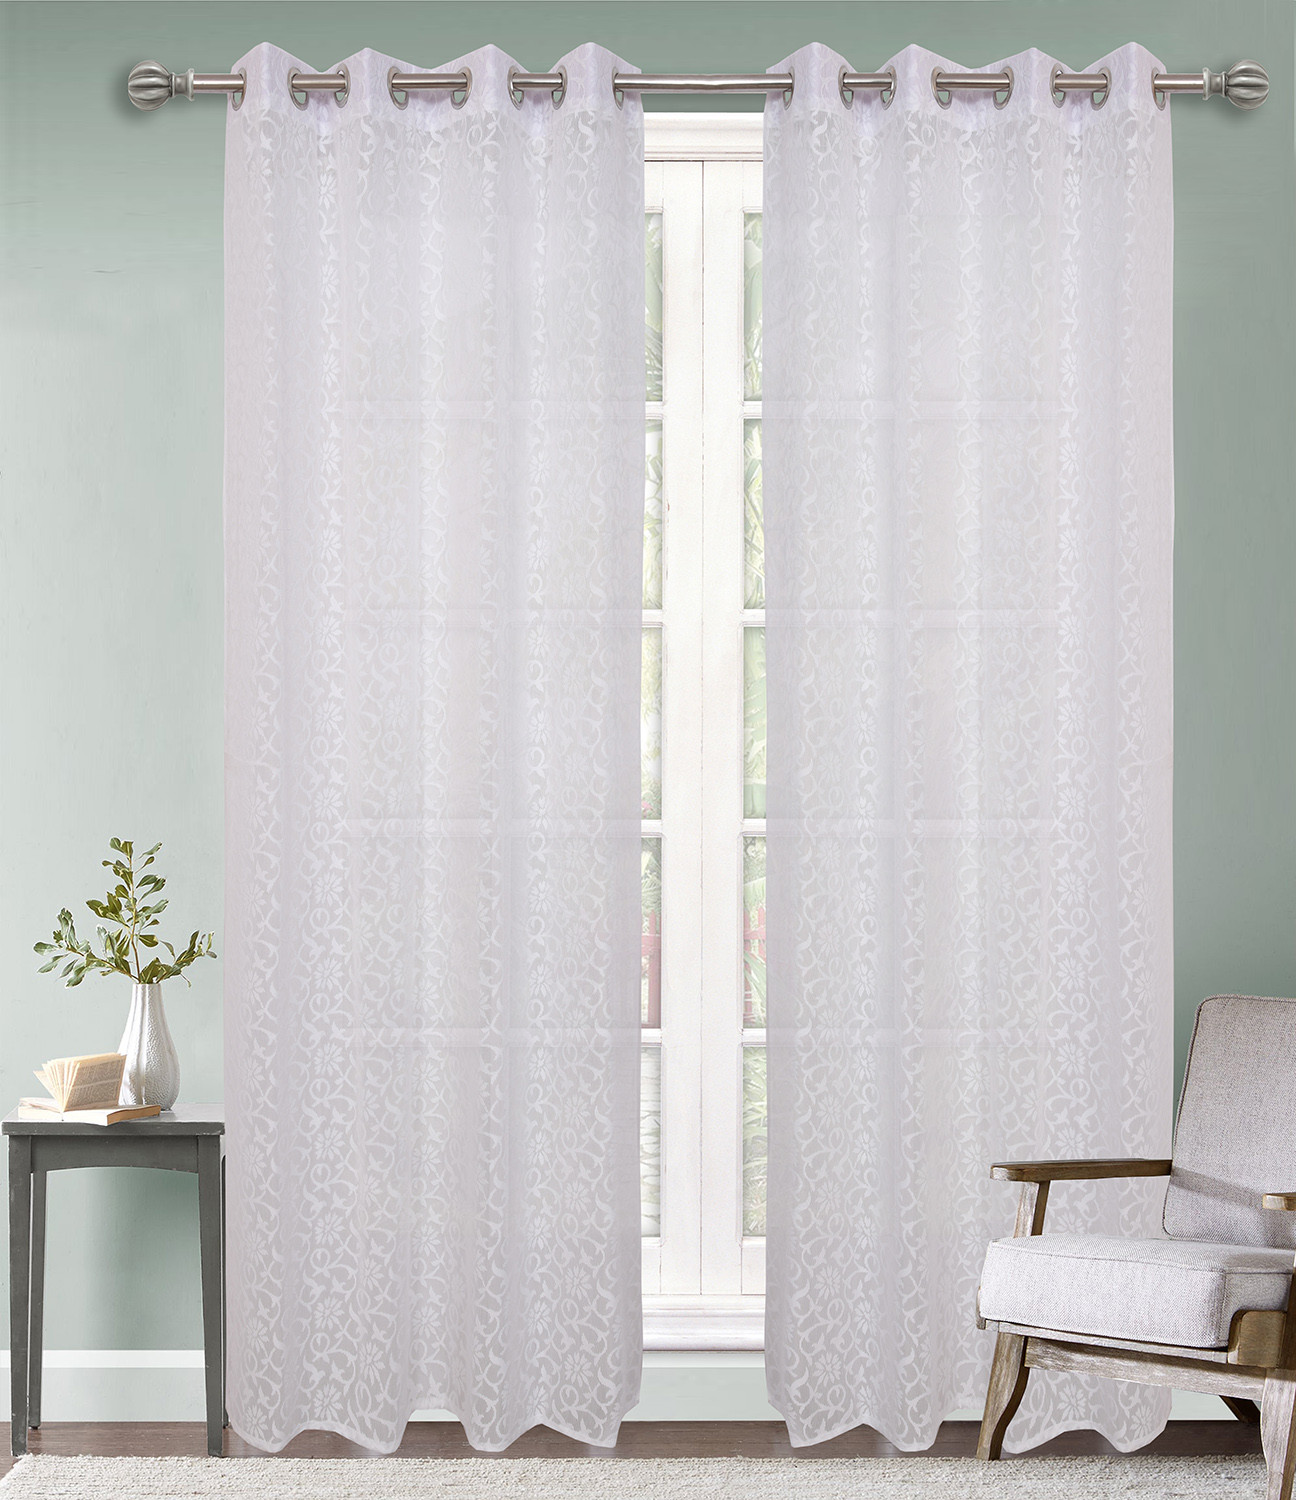 Kuber Industries Flower Design 7 Feet Door Curtain For Living Room, Bed Room, Kids Room With 8 Eyelet (White) 54KM3939